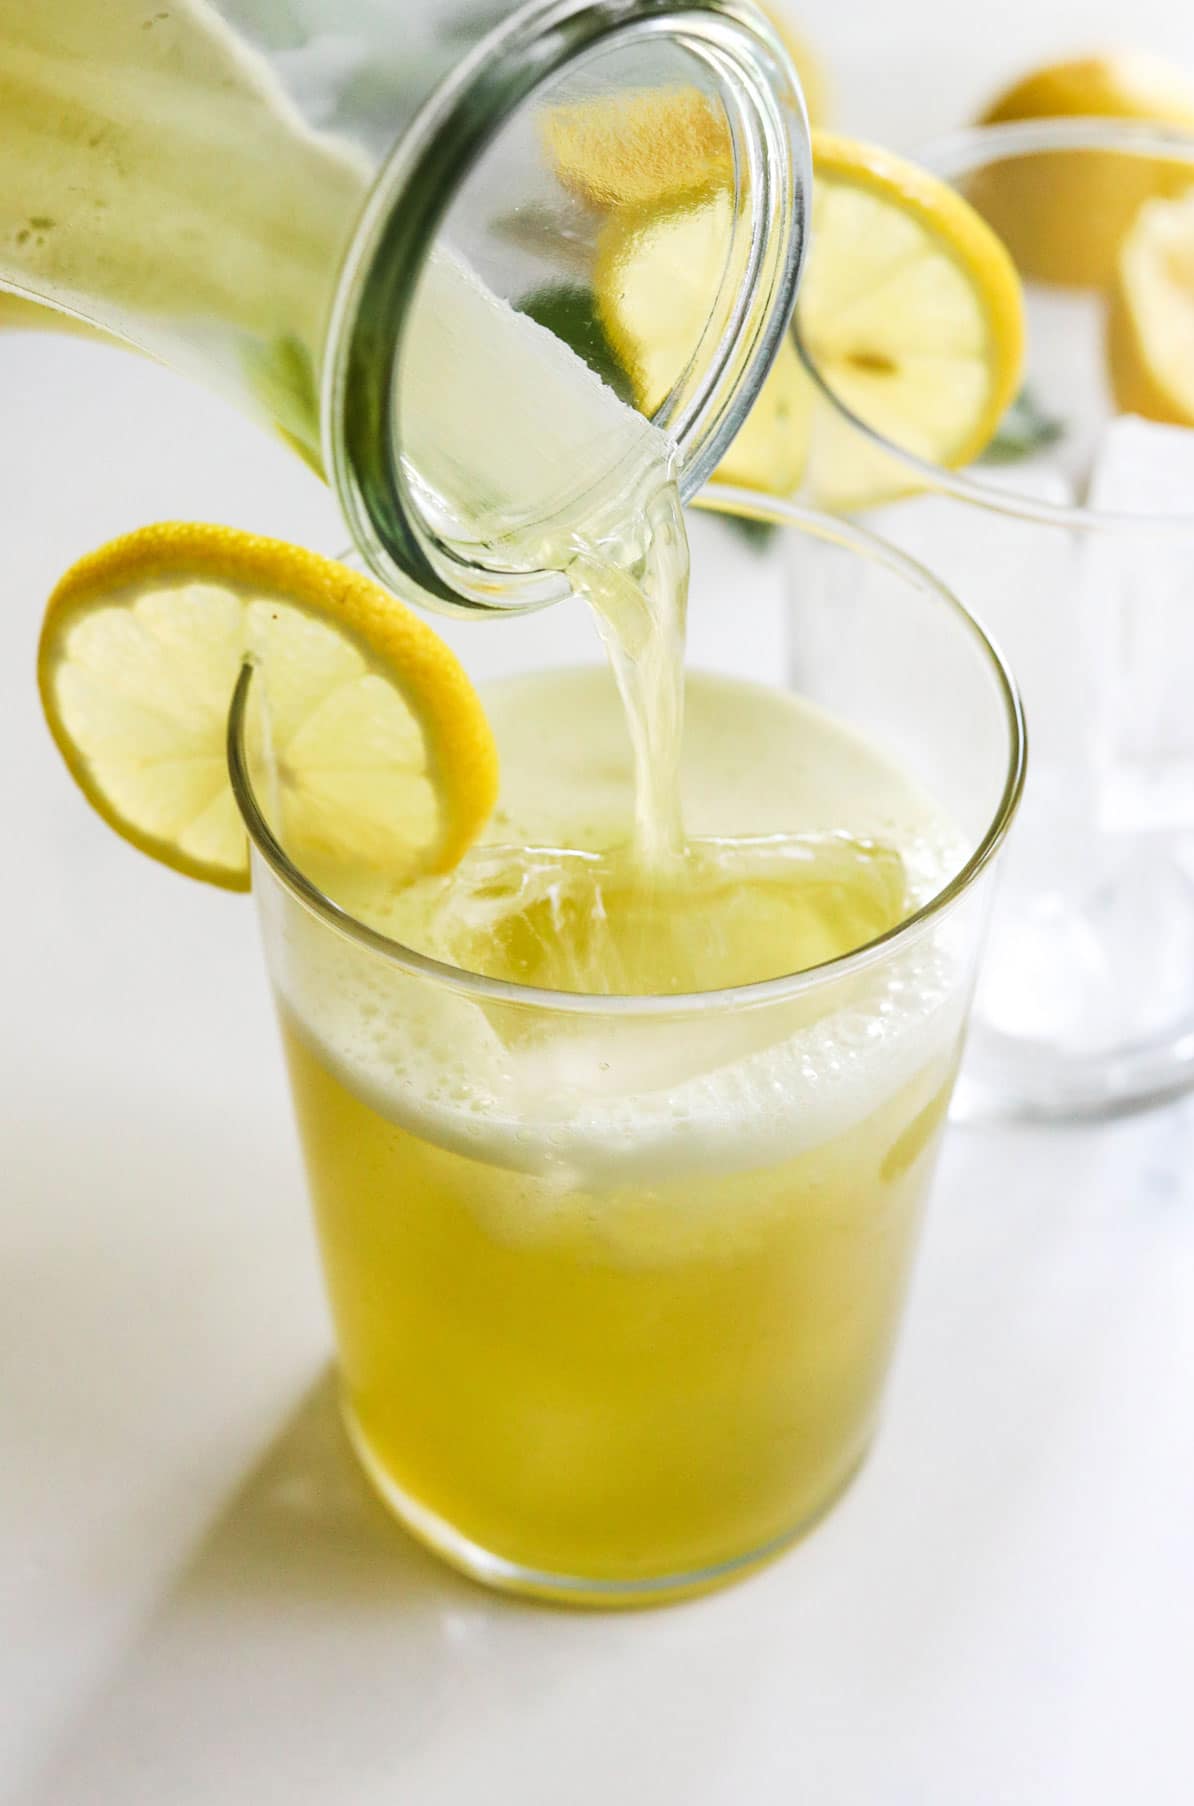 basil lemonade poured into glass